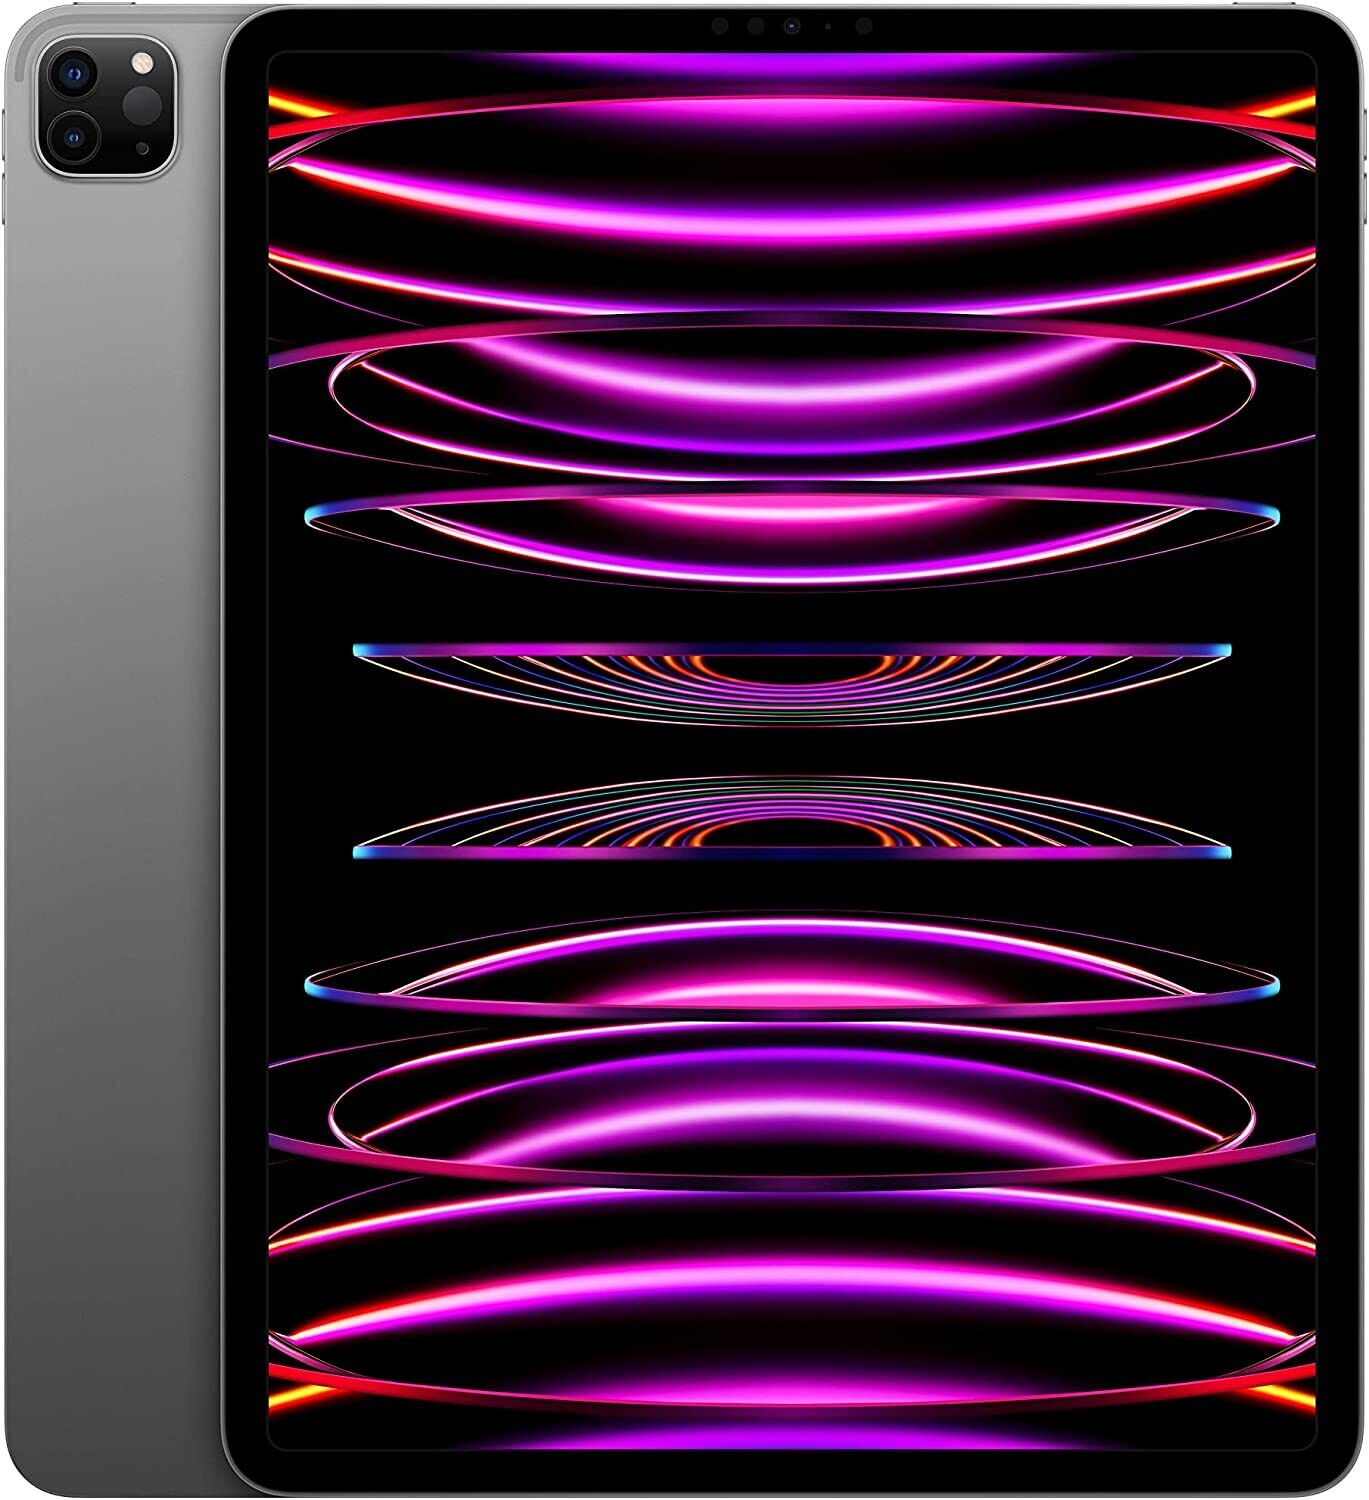 2022 Apple 12.9-inch iPad Pro (Wi-Fi + Cellular, 1TB) - Space Gray (6th Generation)